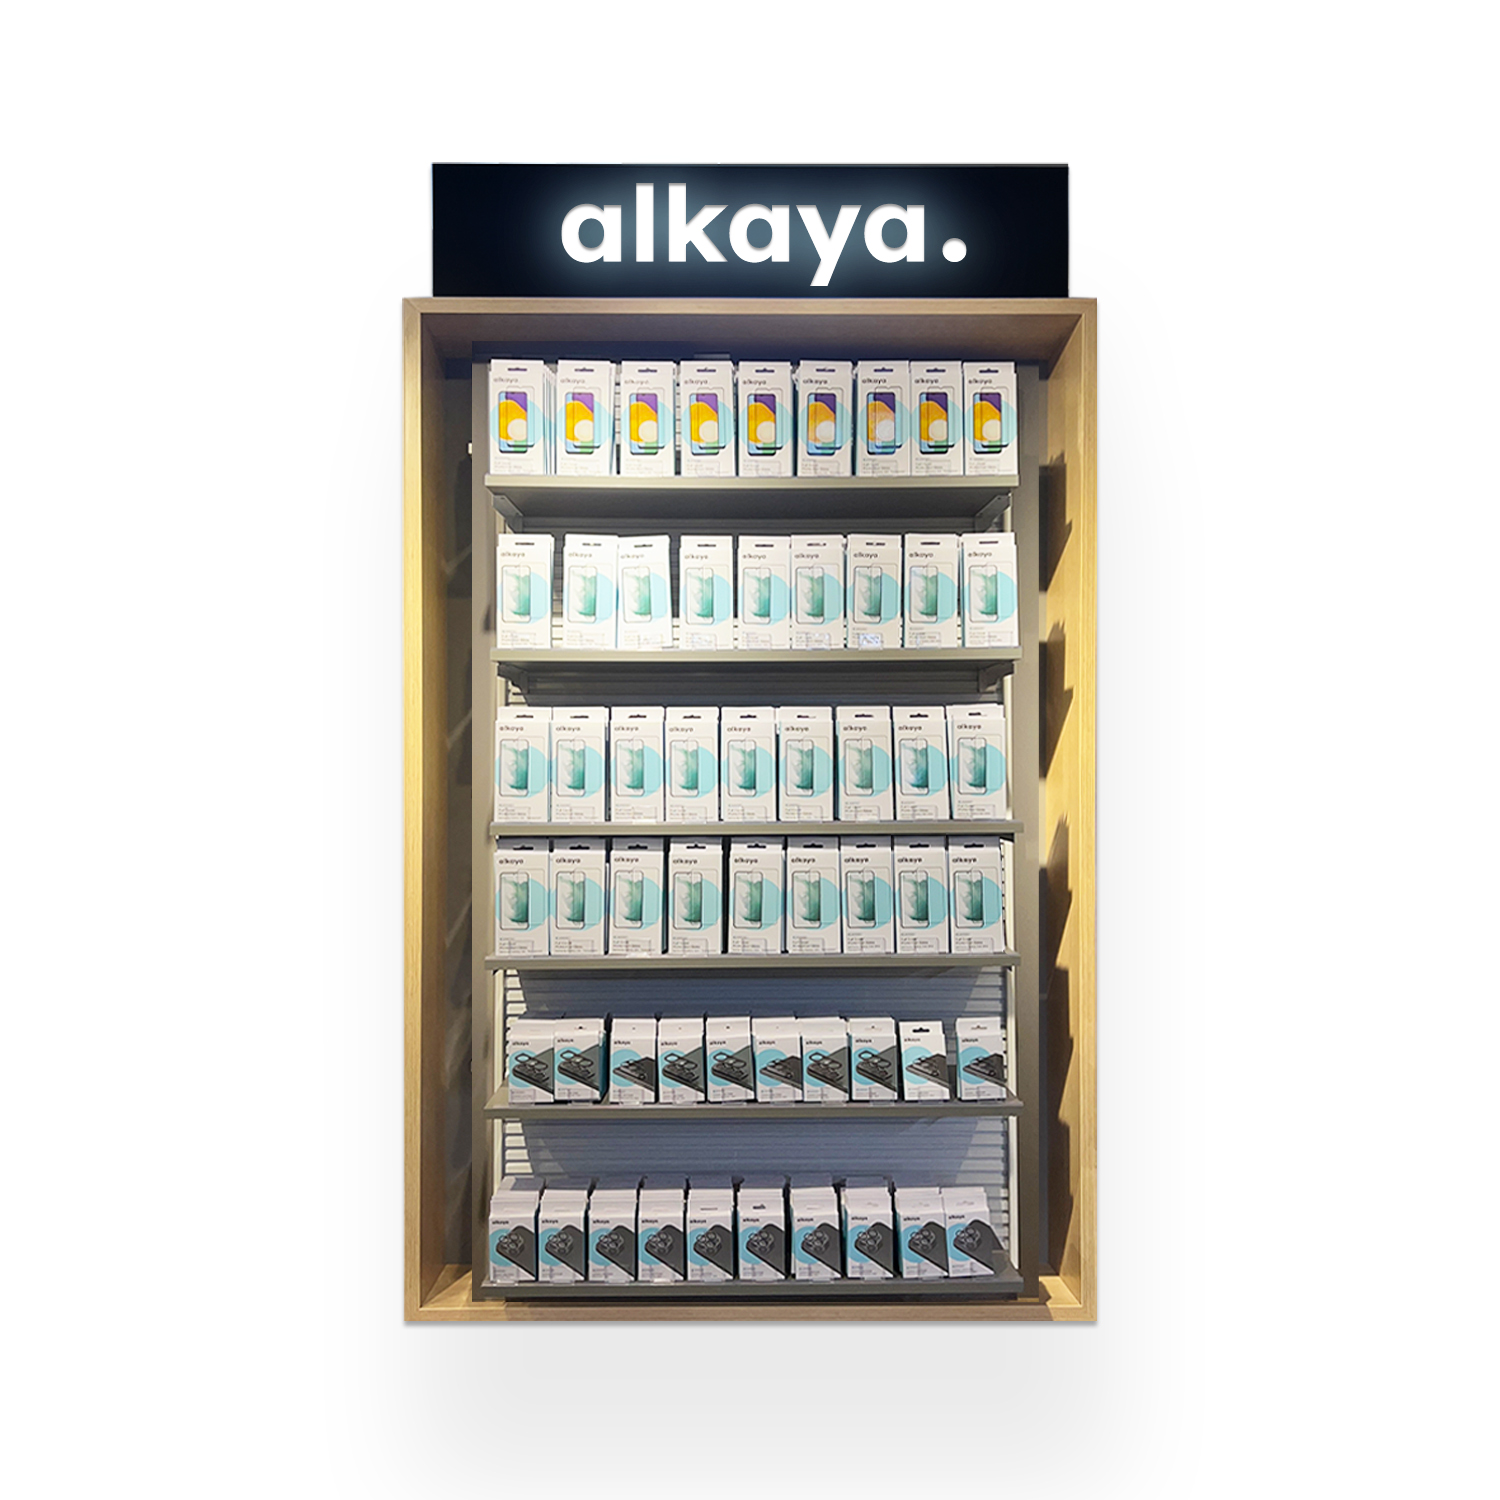 alkaya. | Sales wall conception